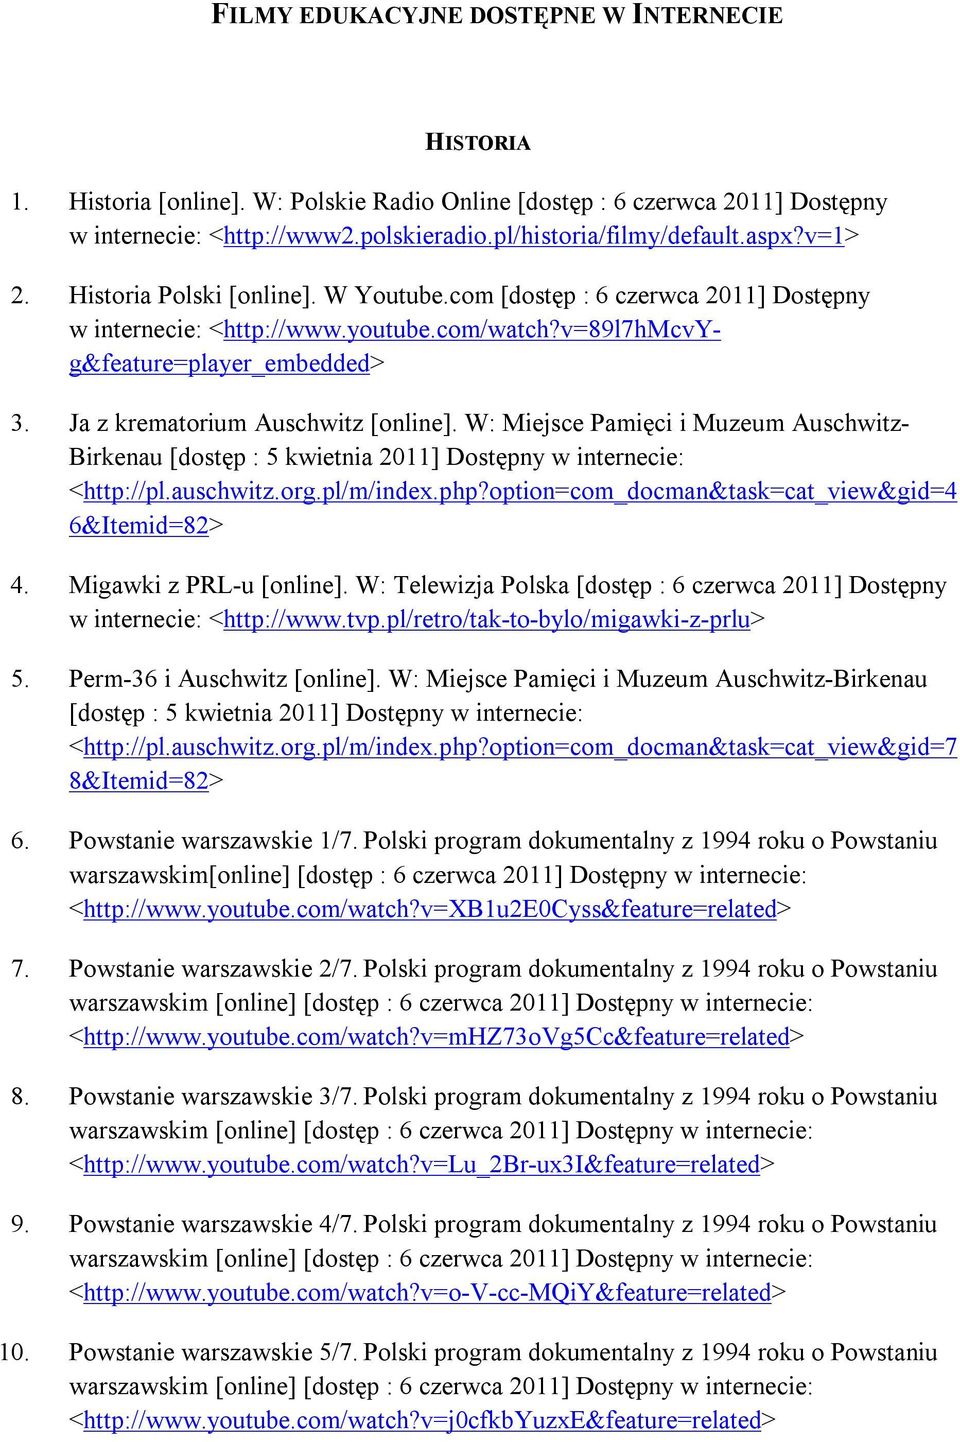 Ja z krematorium Auschwitz [online]. W: Miejsce Pamięci i Muzeum Auschwitz- Birkenau <http://pl.auschwitz.org.pl/m/index.php?option=com_docman&task=cat_view&gid=4 6&Itemid=82> 4.